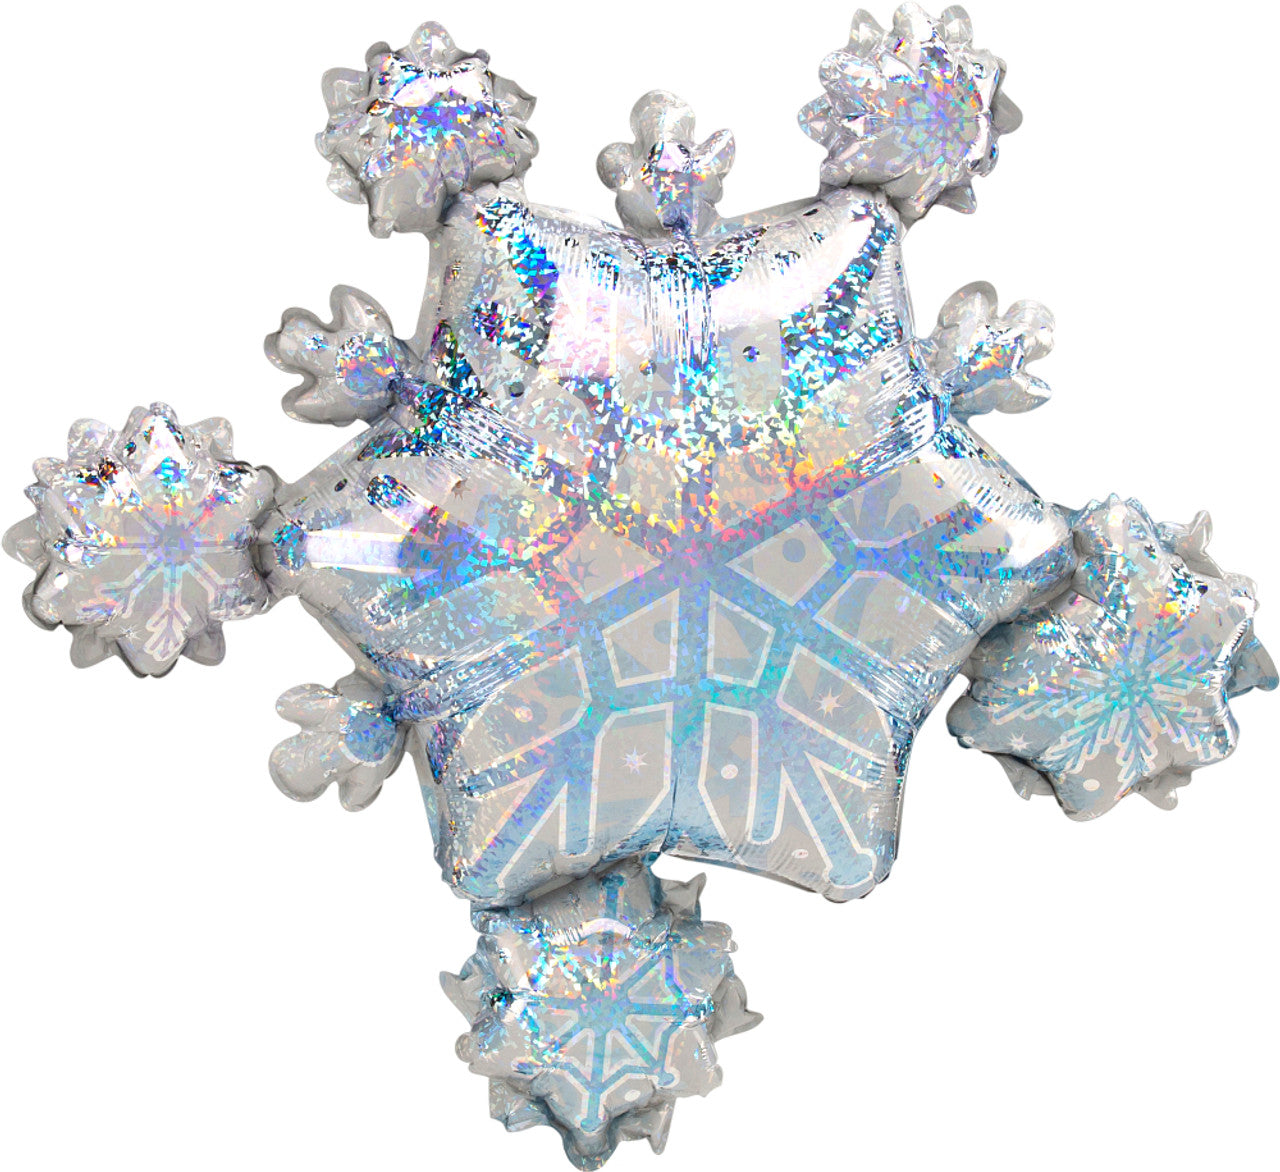 A Snowflake Cluster Hologram 32" Mylar balloon